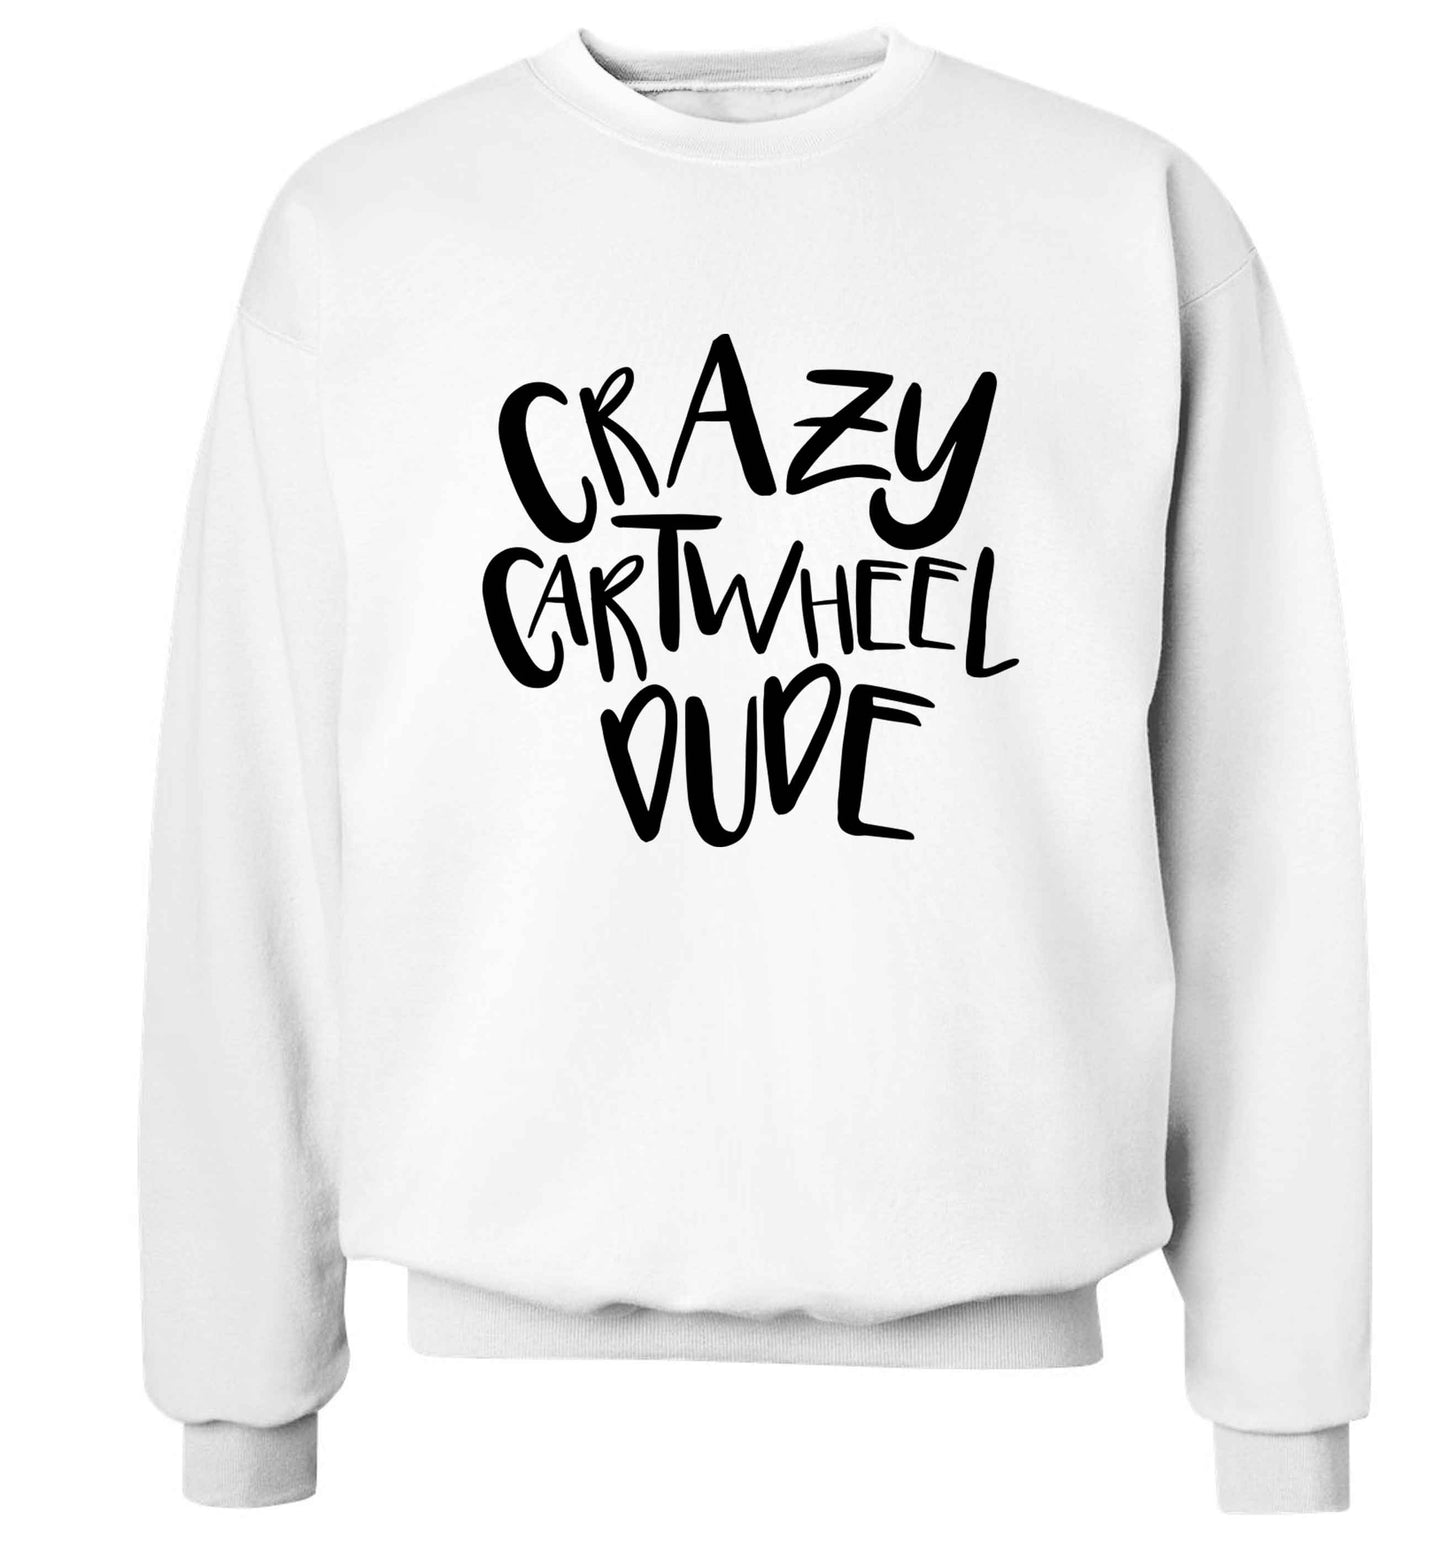 Crazy cartwheel dude Adult's unisex white Sweater 2XL